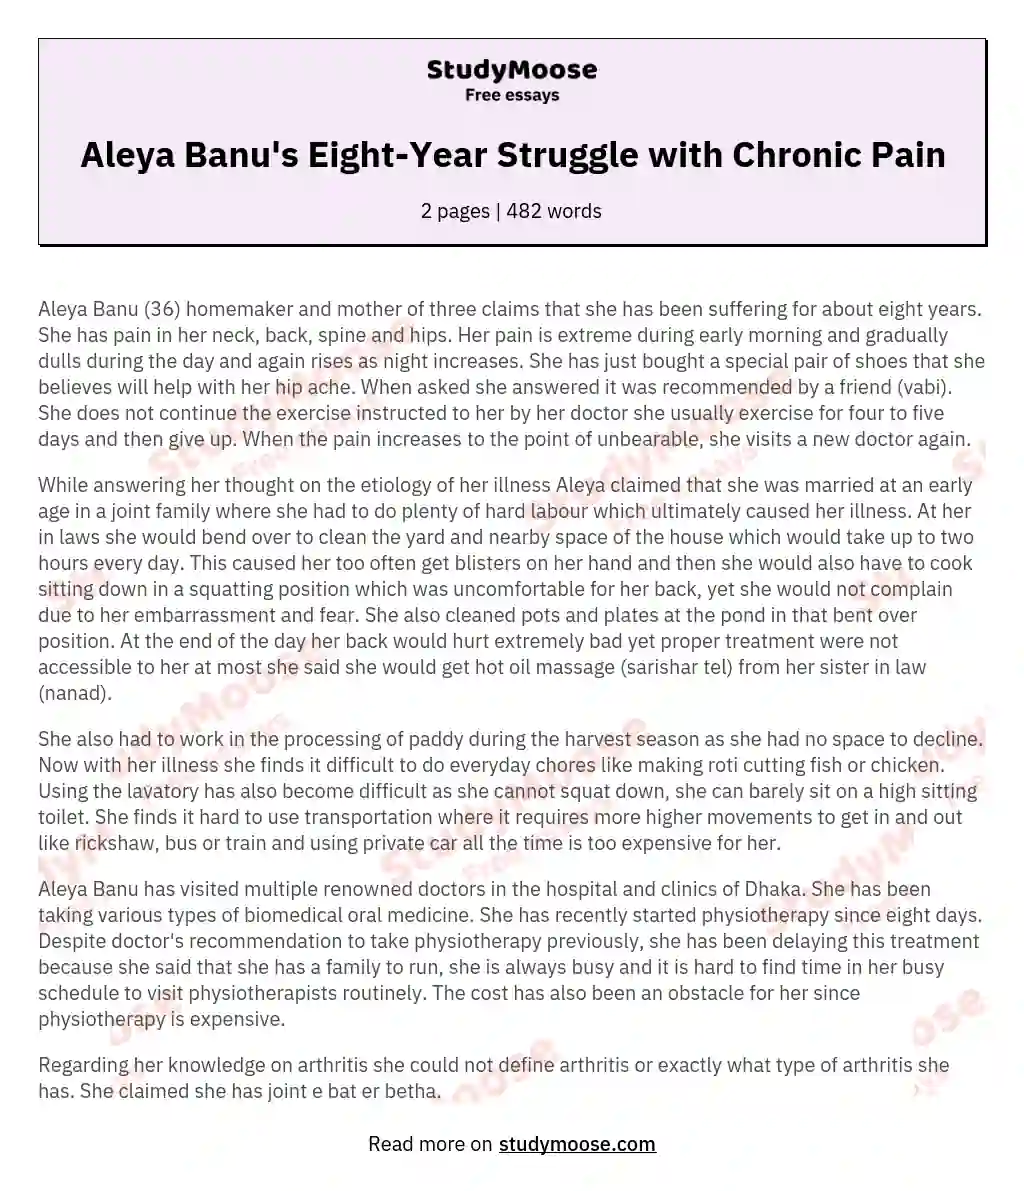 Aleya Banu's Eight-Year Struggle with Chronic Pain essay